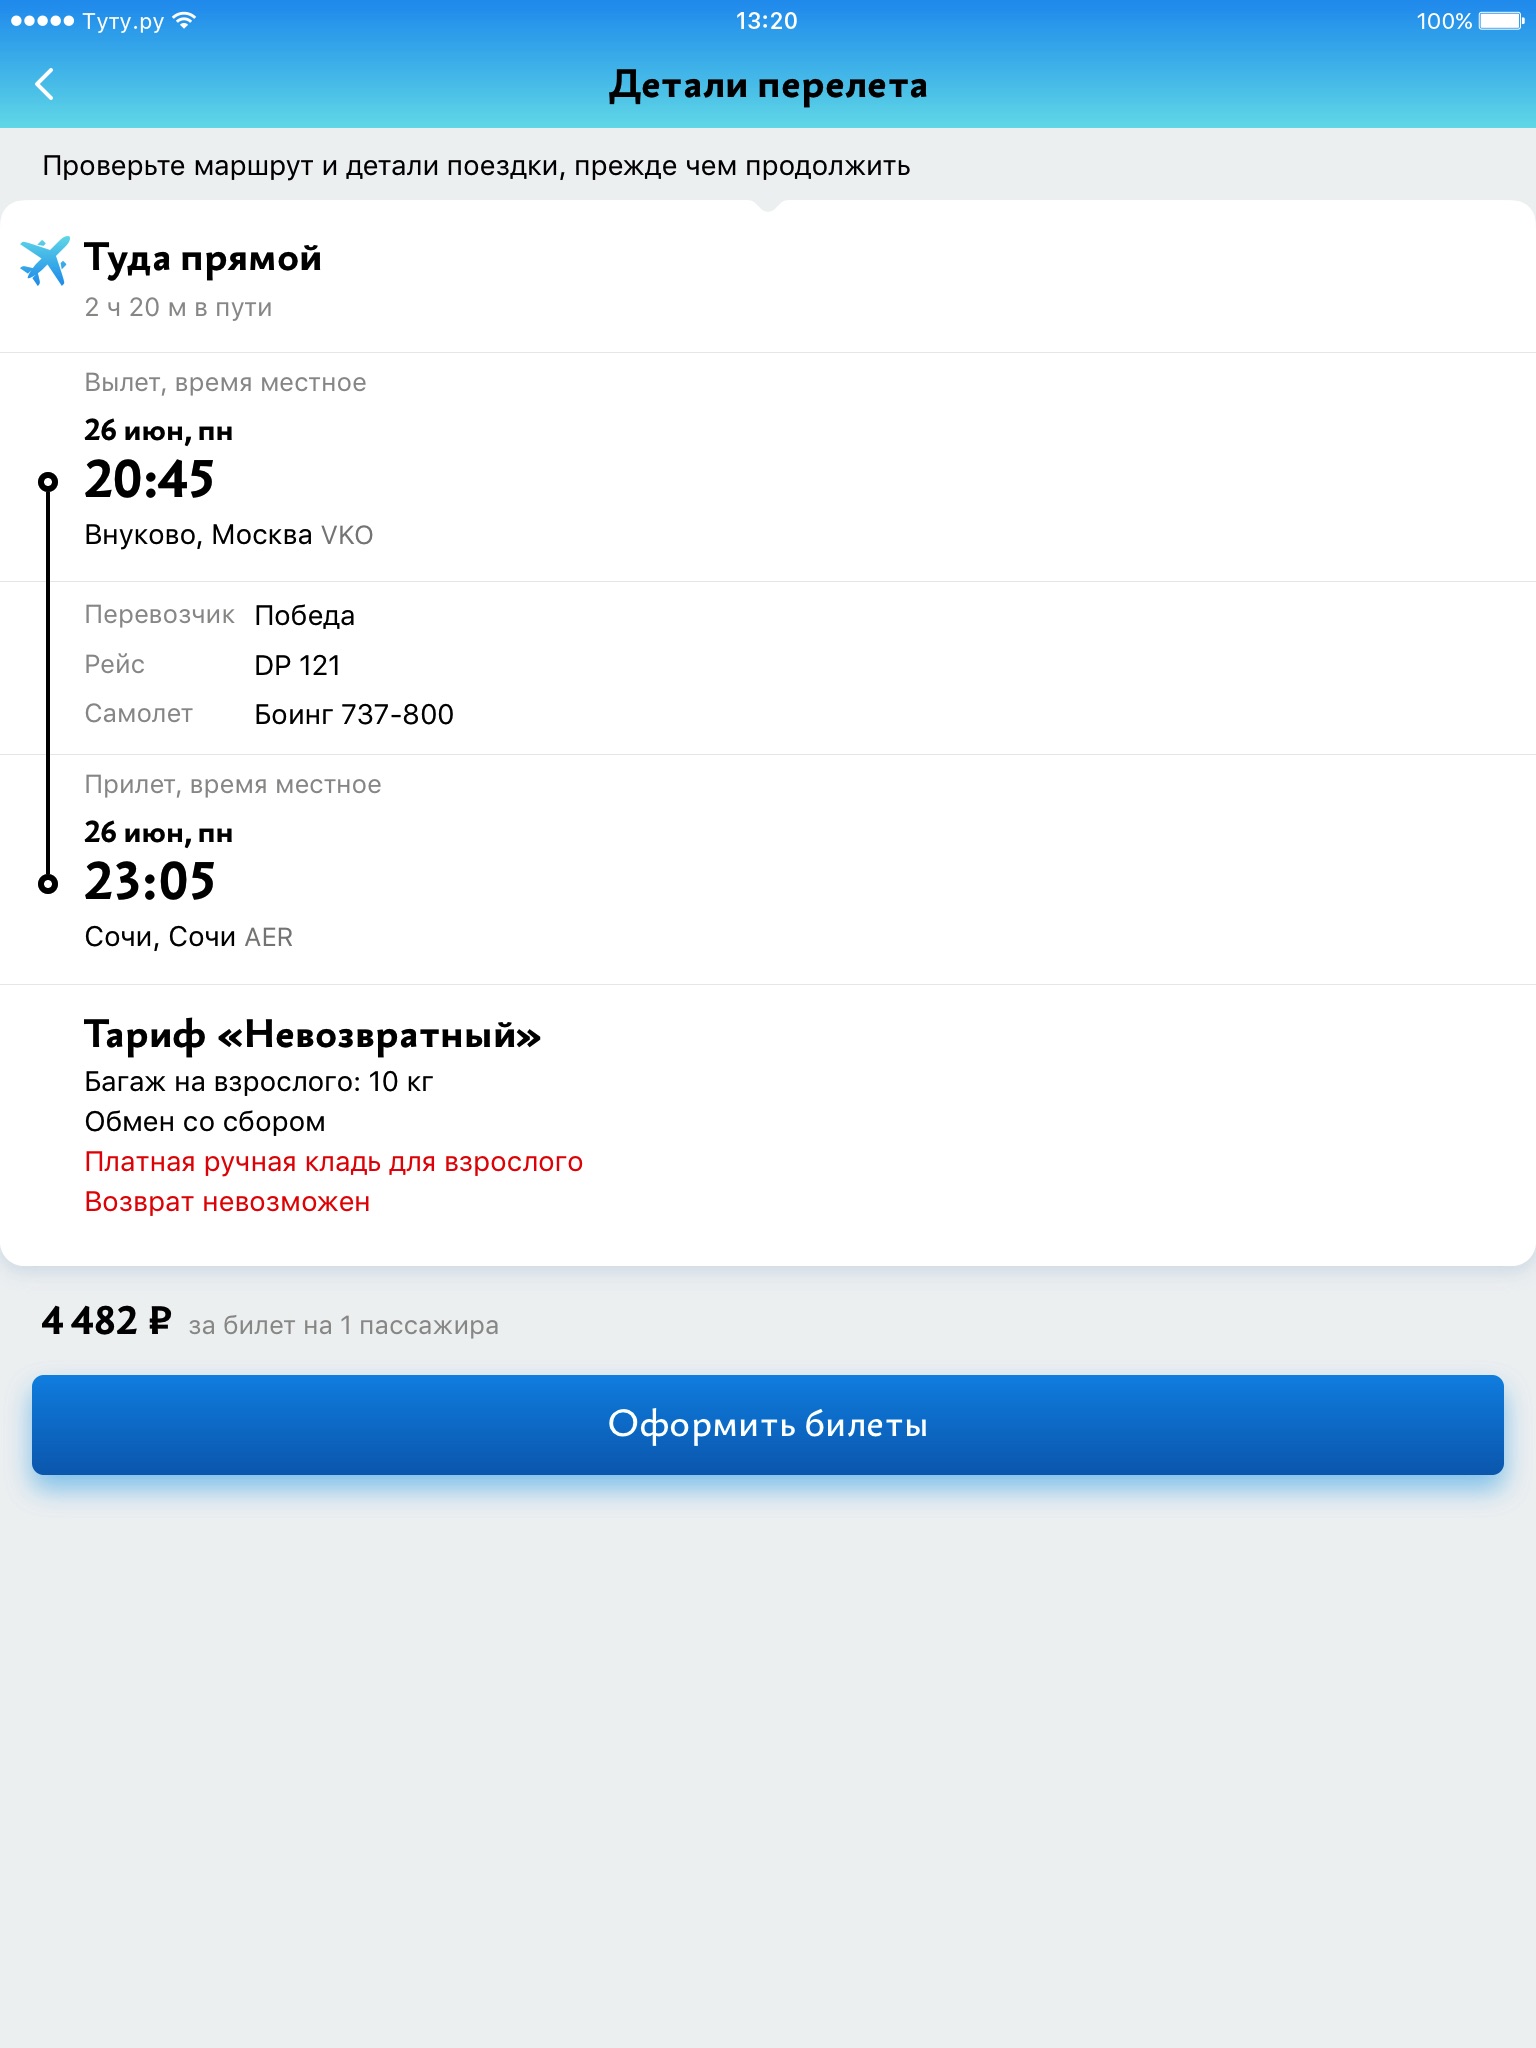 Авиабилеты дешево на Туту ру screenshot 3